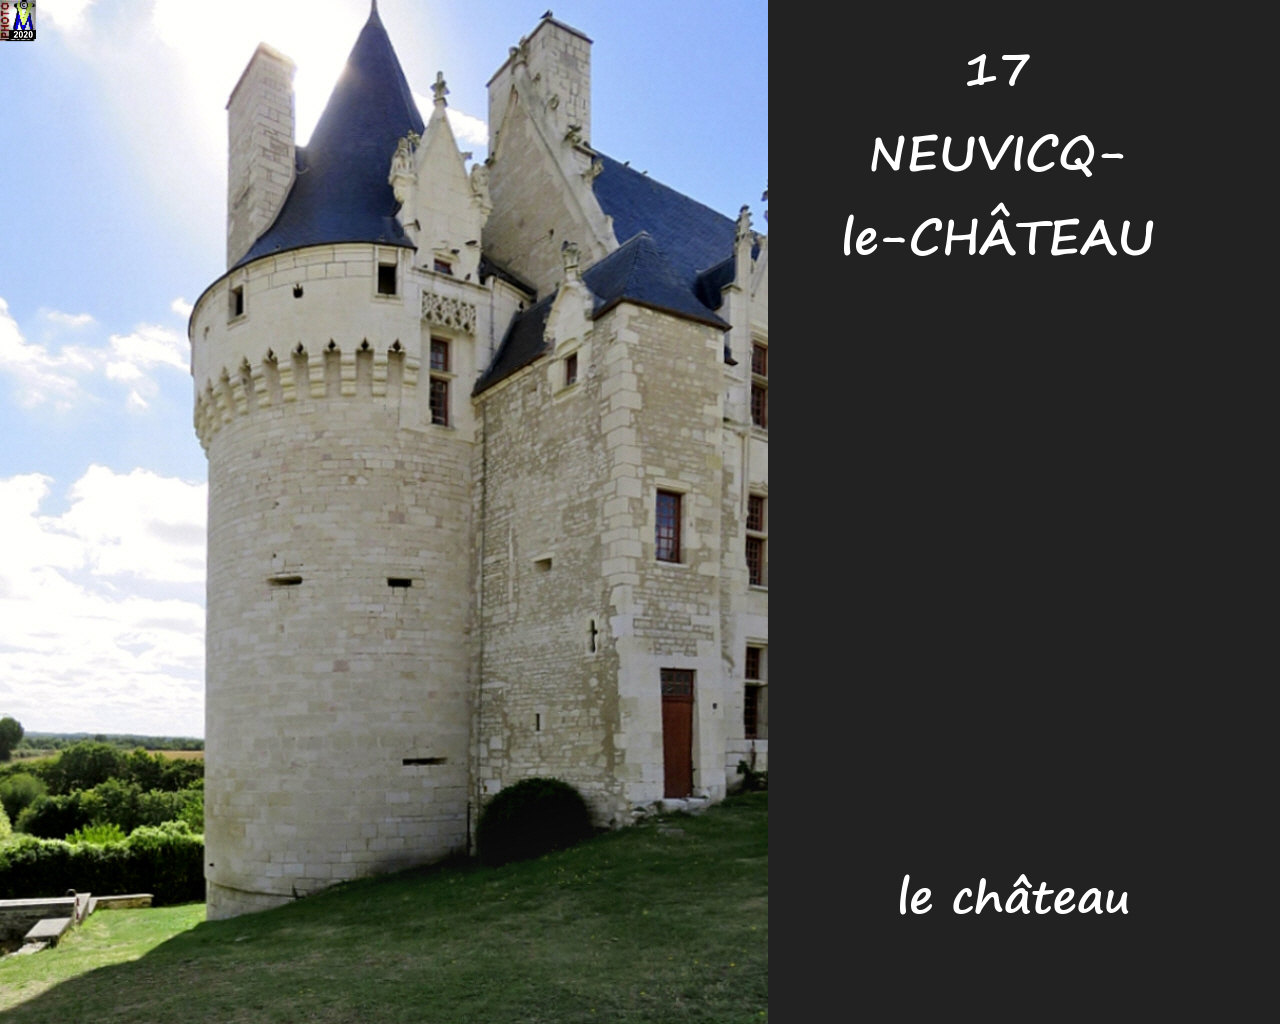 17NEUVICQ-CHATEAU_chateau_1010.jpg